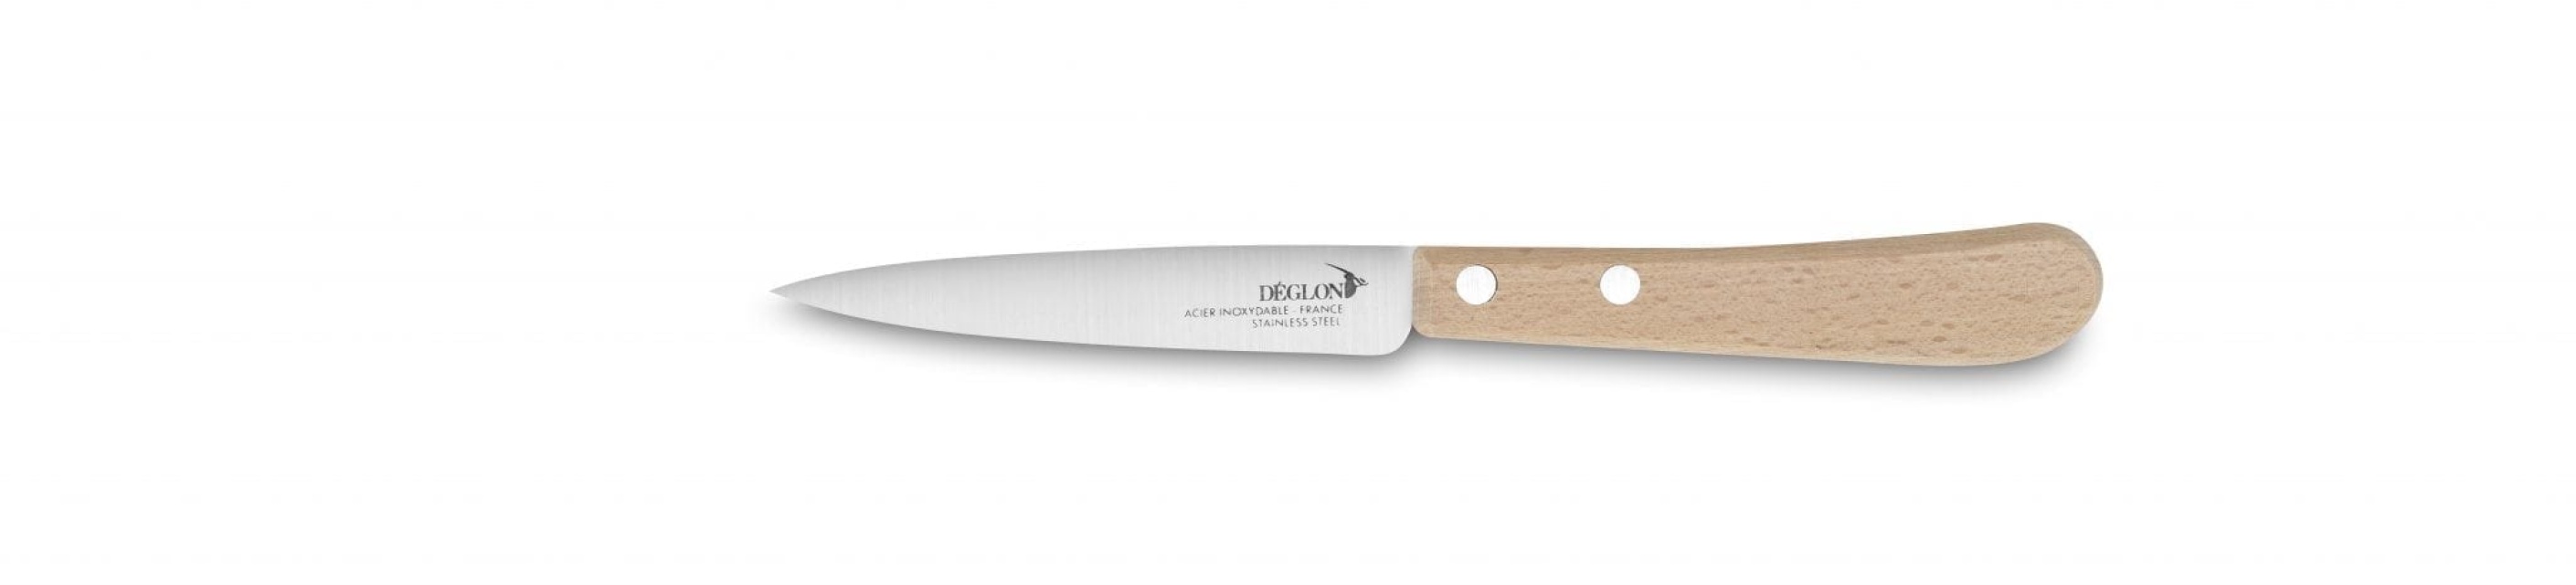 Paring knife - Déglon